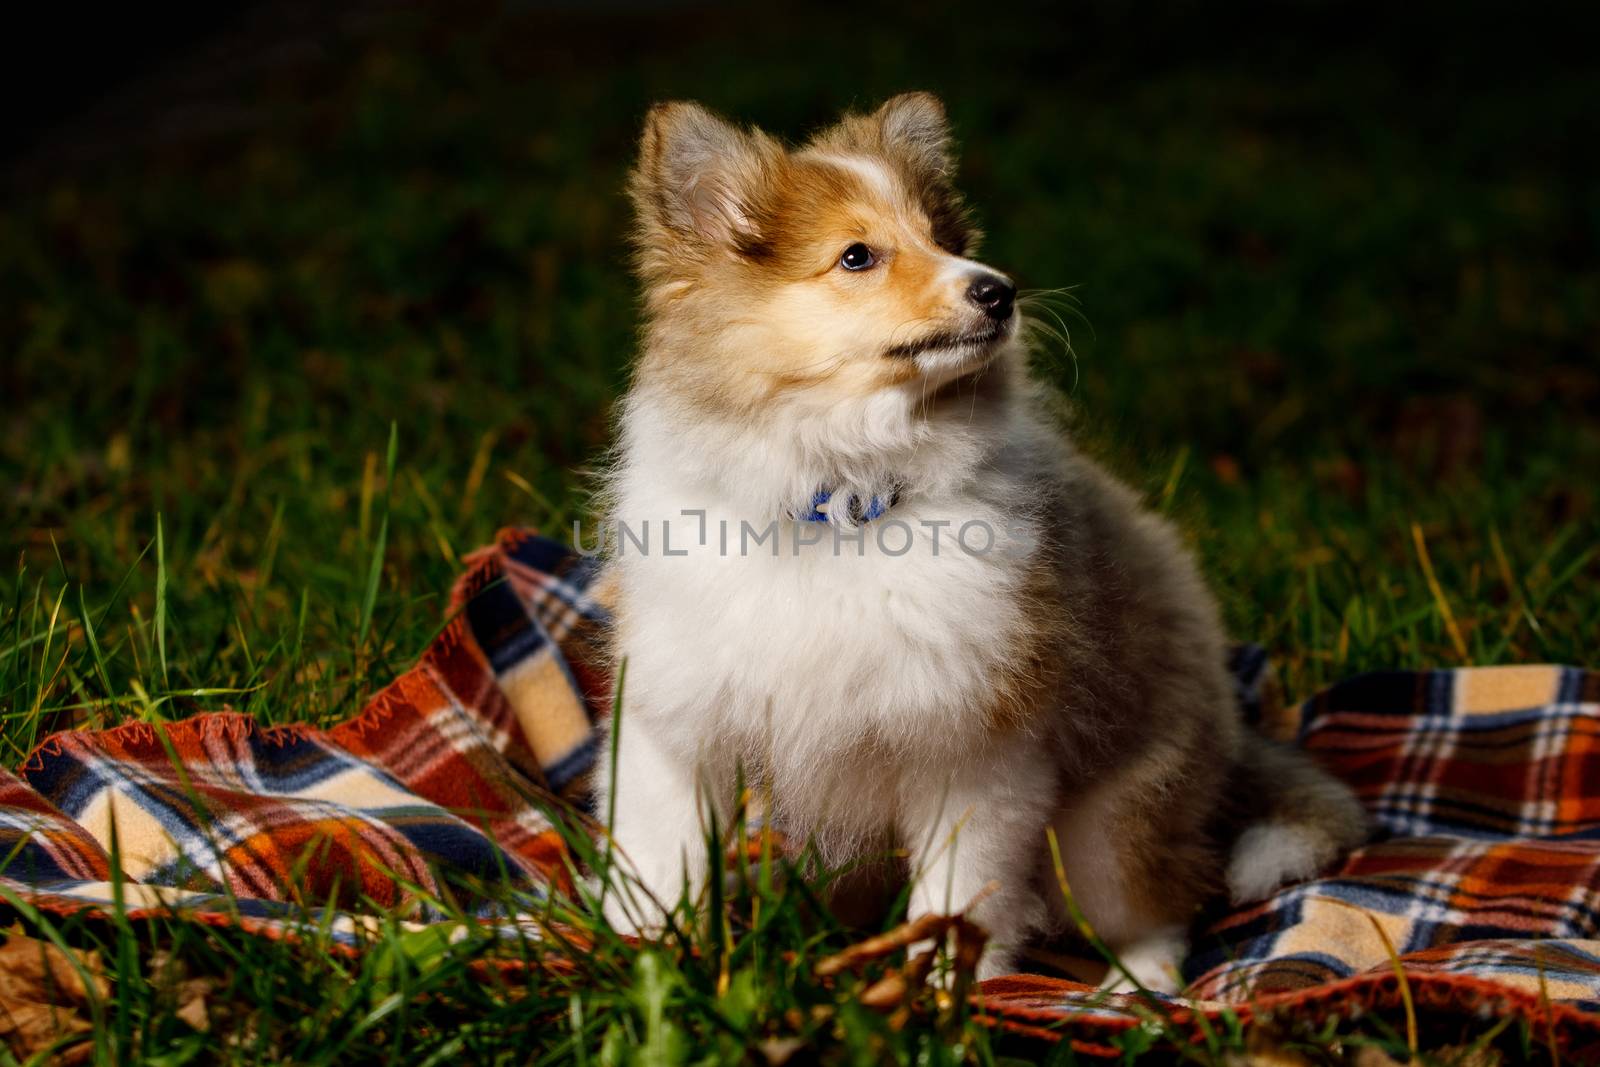 Dog on a blanket. Shetland sheepdog puppy